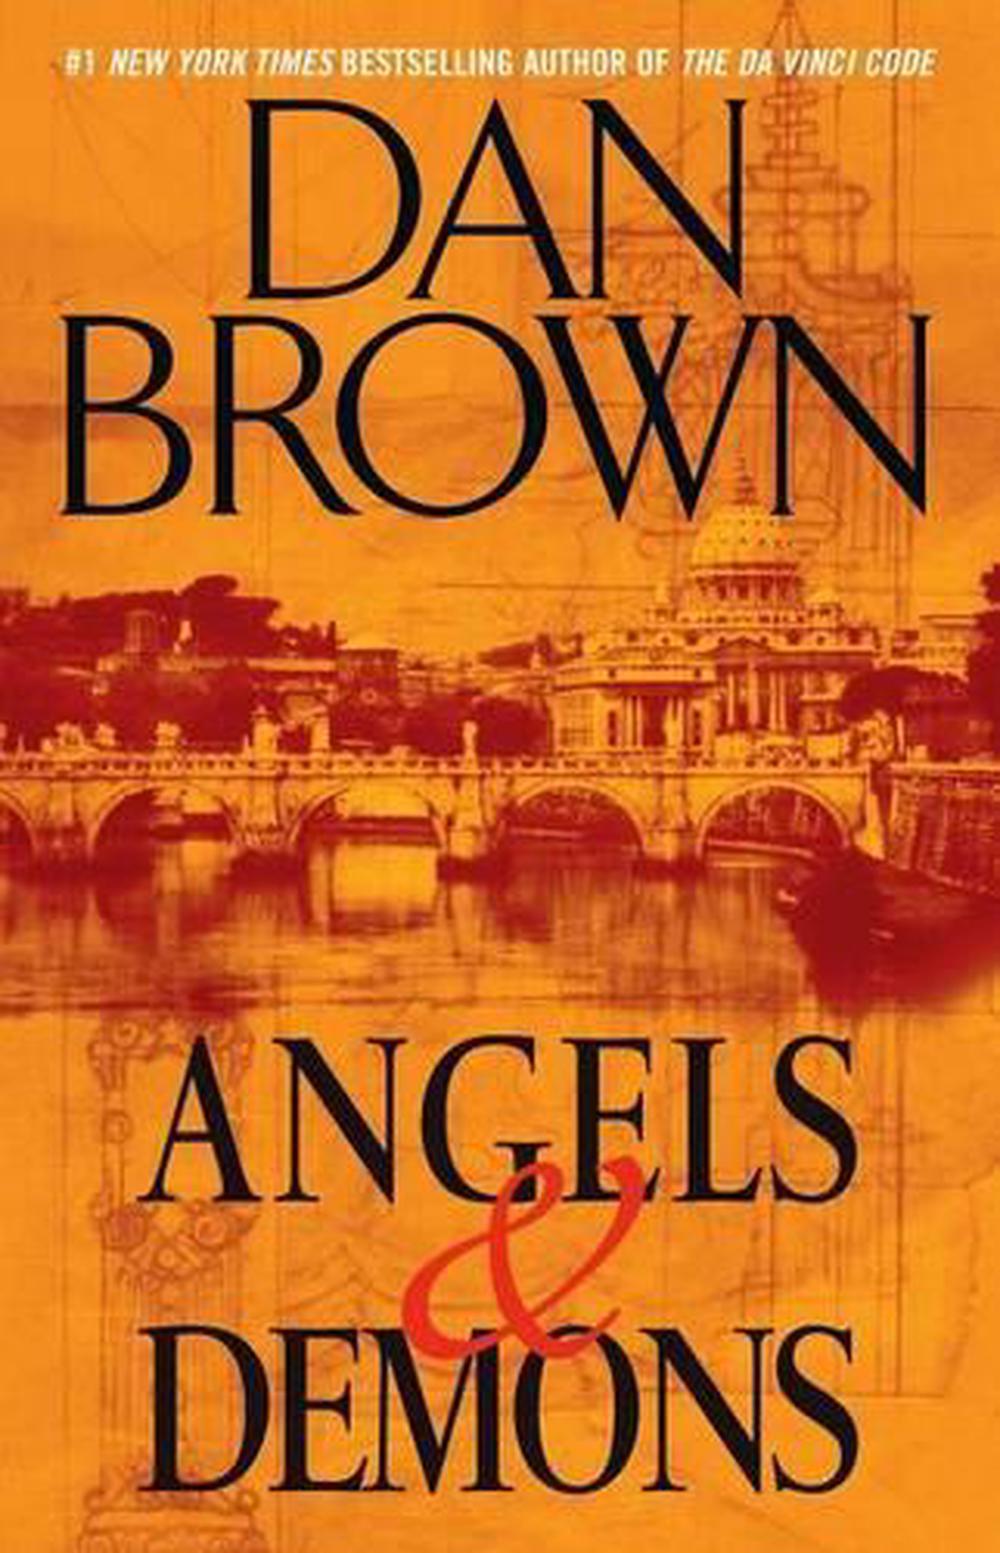 Angels Demons By Dan Brown Paperback Buy Online At The Nile